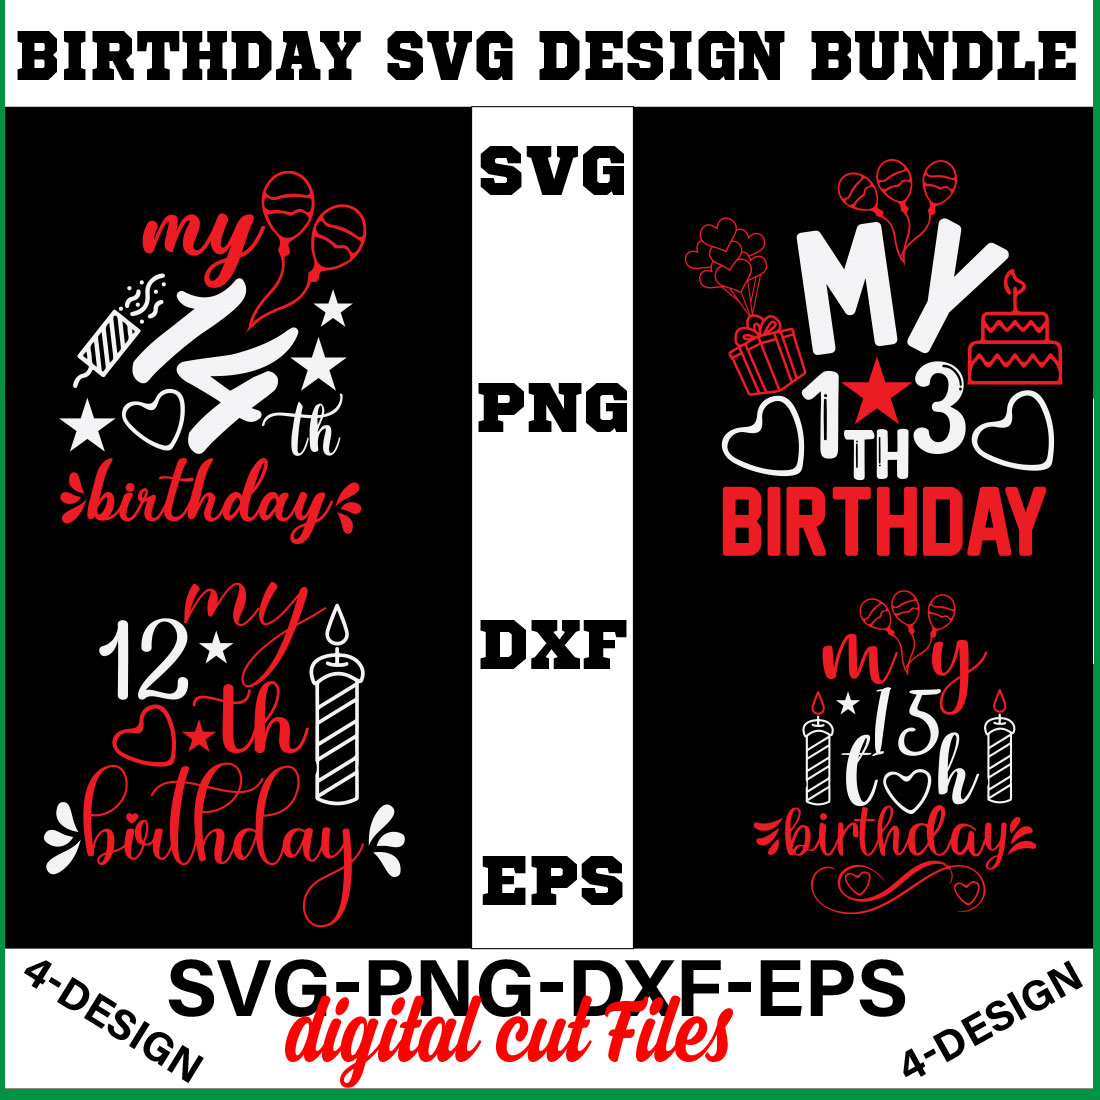 birthday svg design bundle Happy birthday svg bundle hand lettered birthday svg birthday party svg Volume-30 cover image.